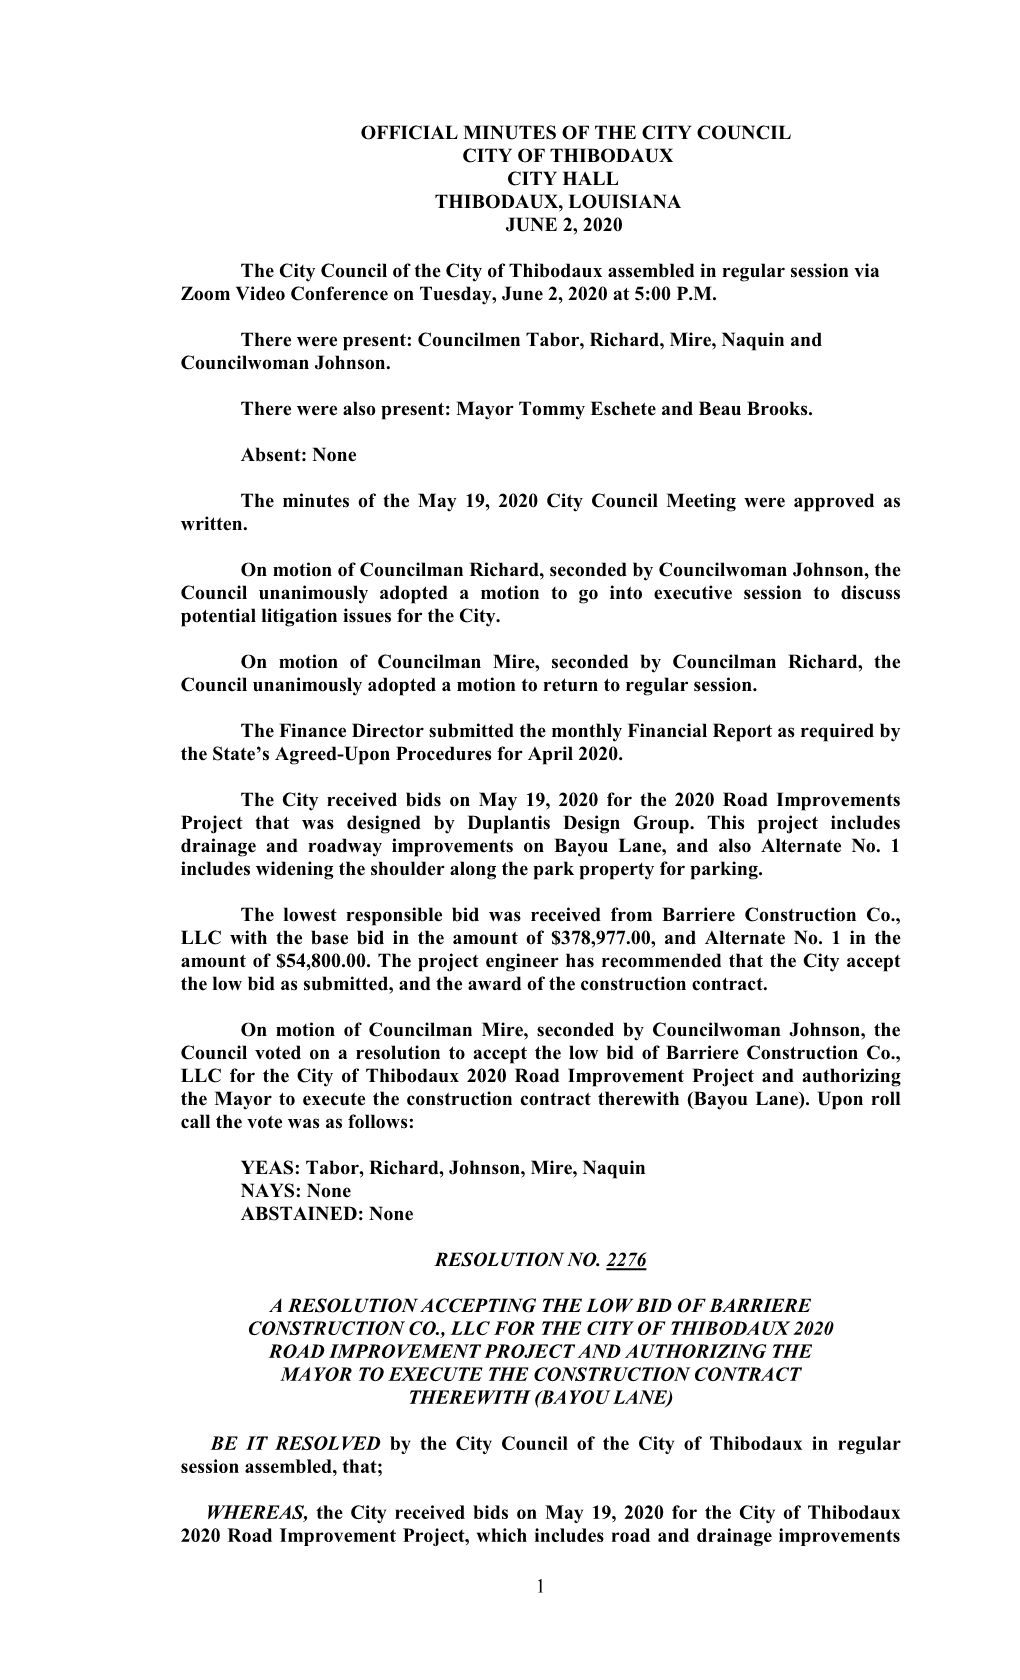 Official Minutes of the City Council City of Thibodaux City Hall Thibodaux, Louisiana June 2, 2020